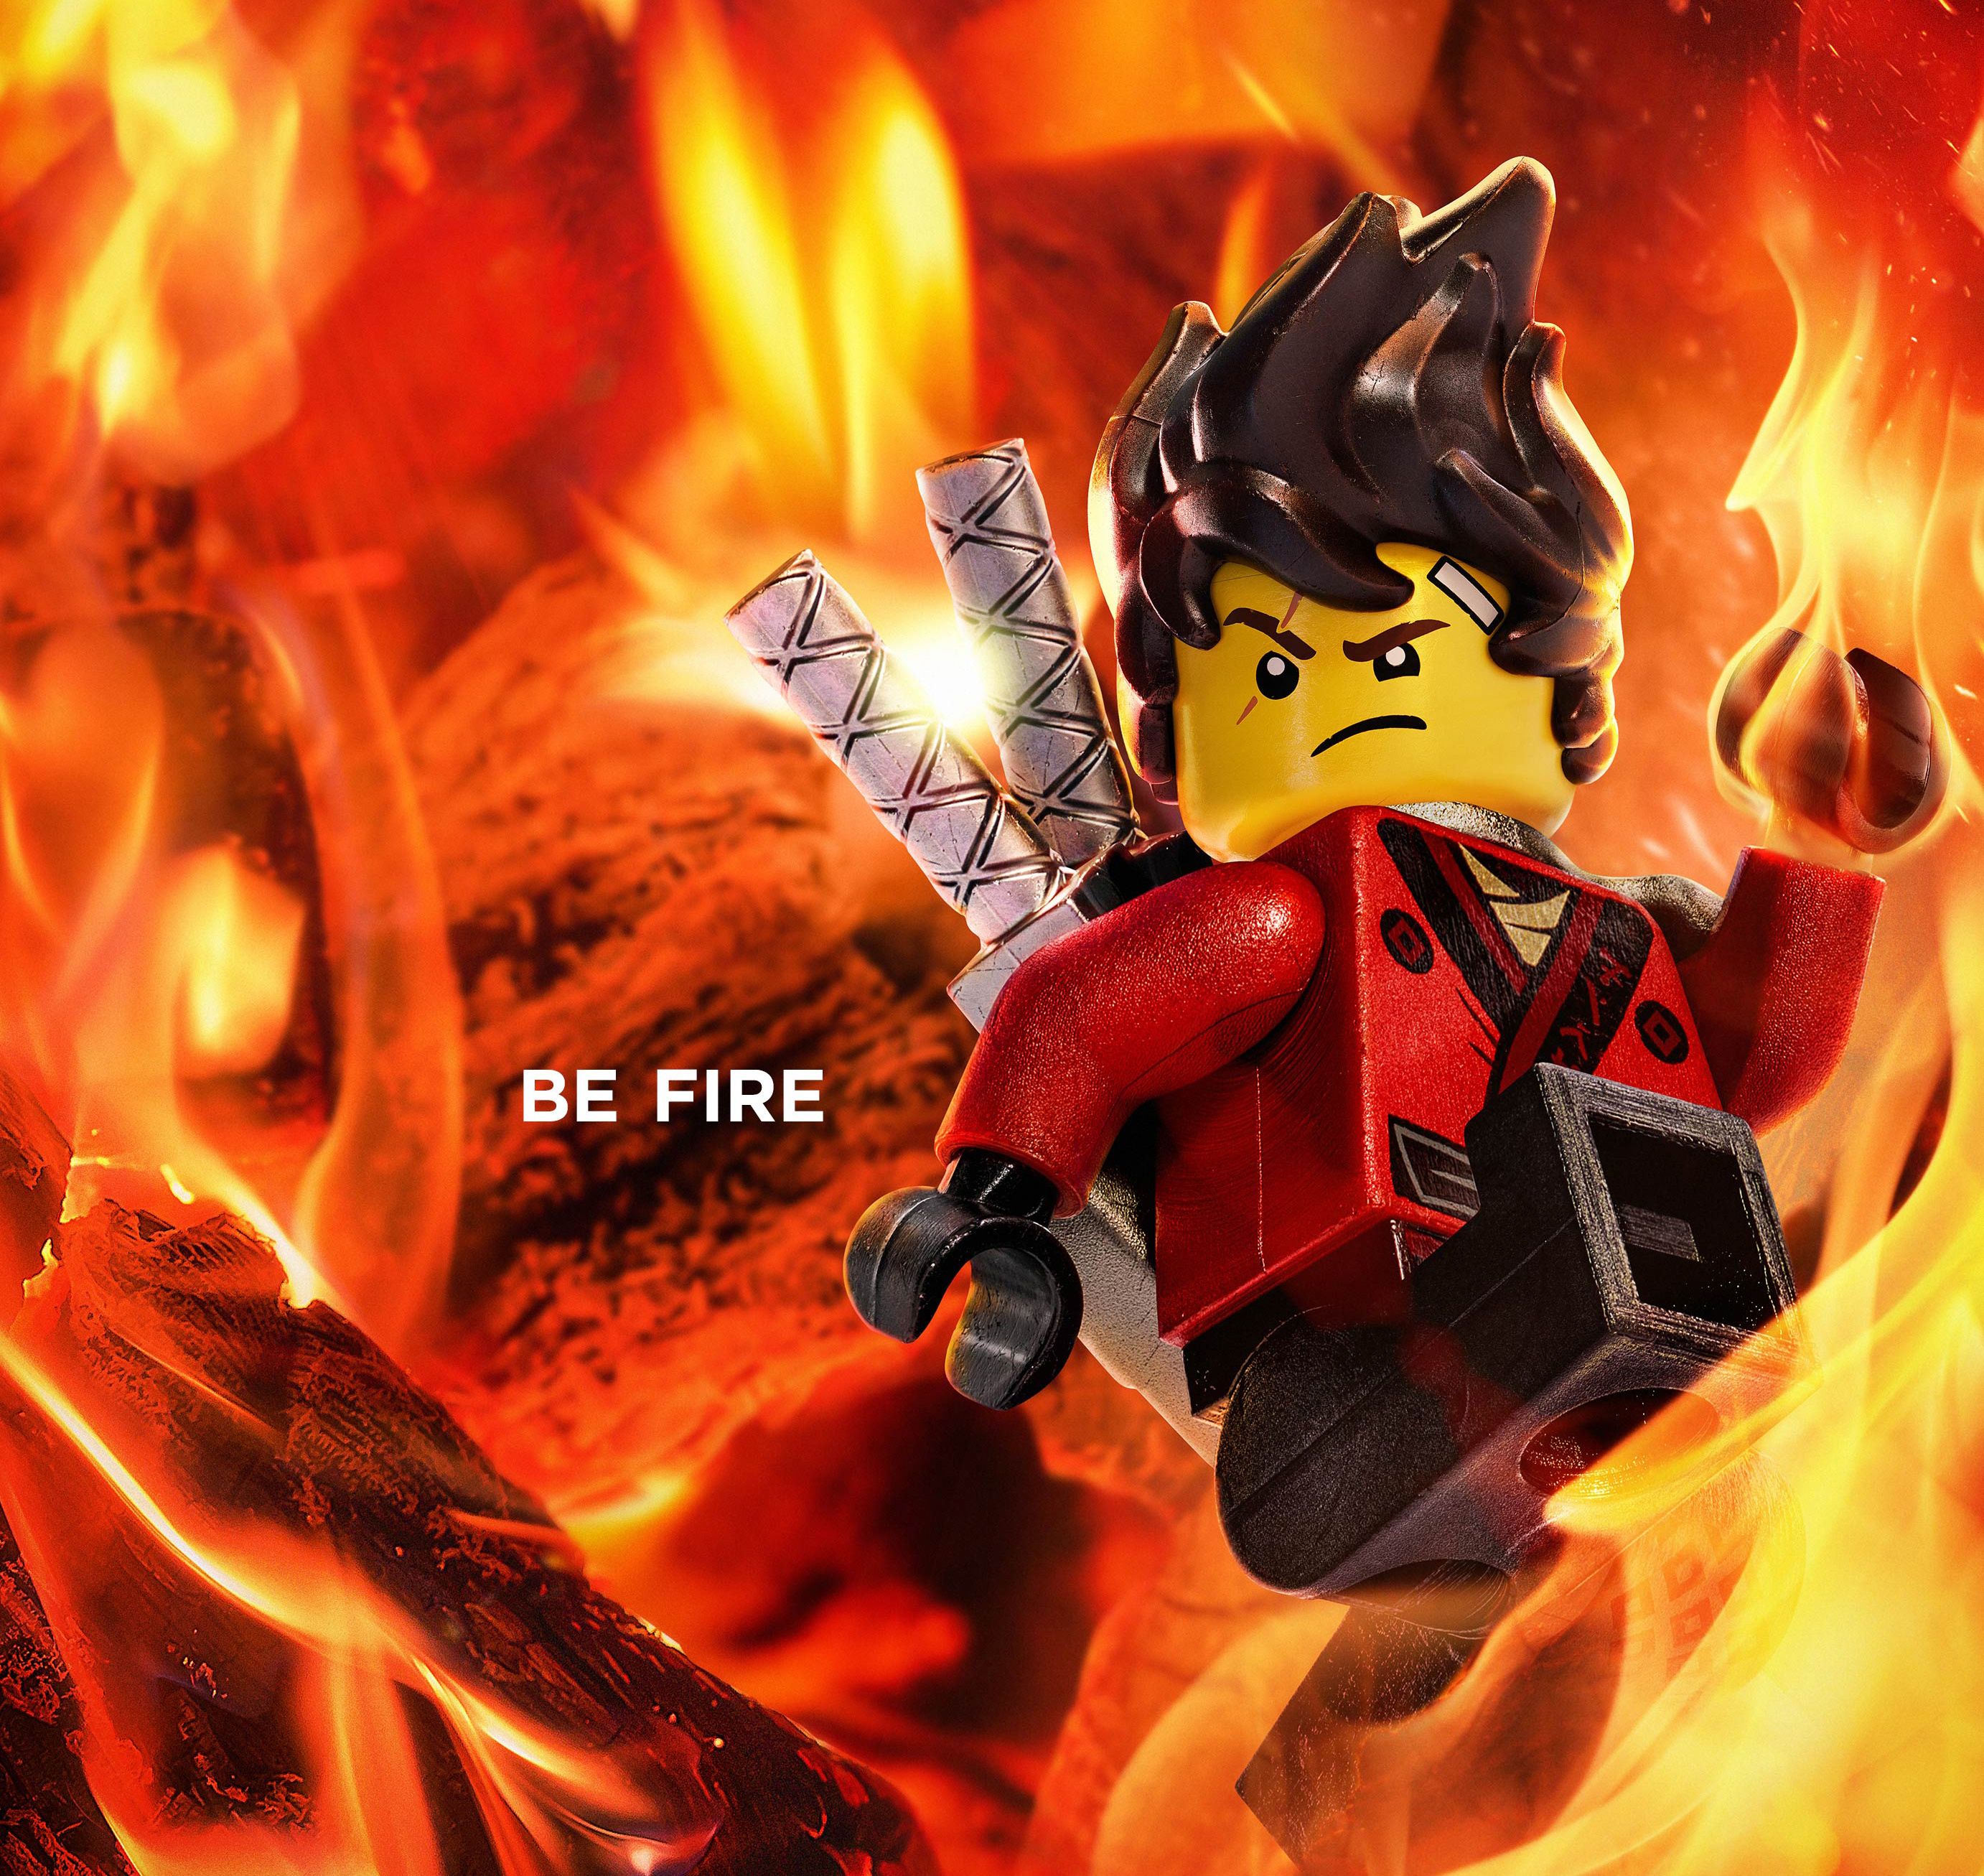 Lego Ninjago Movie Be Fire HD Wallpaper